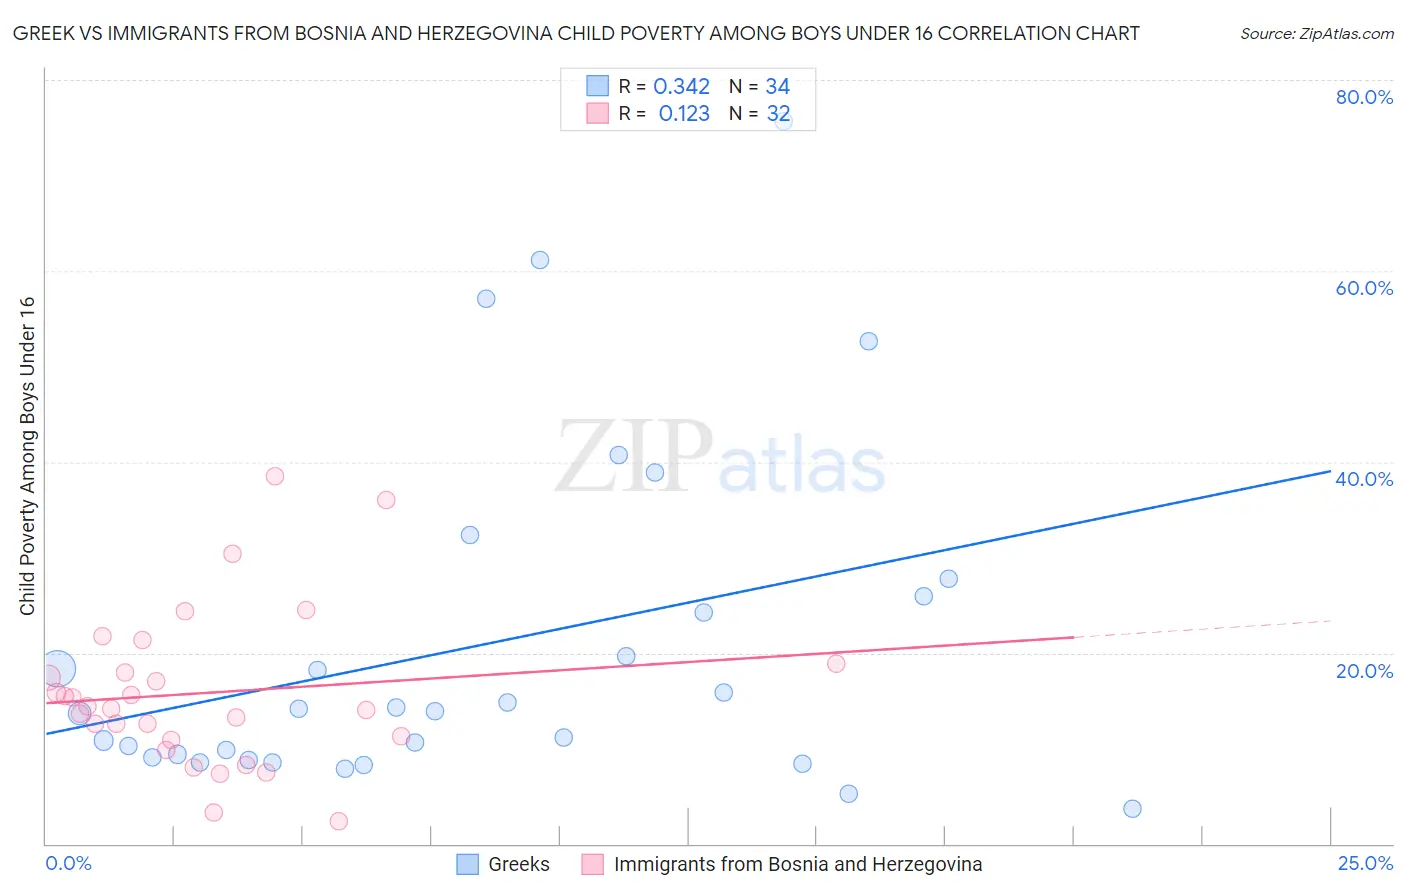 Greek vs Immigrants from Bosnia and Herzegovina Child Poverty Among Boys Under 16